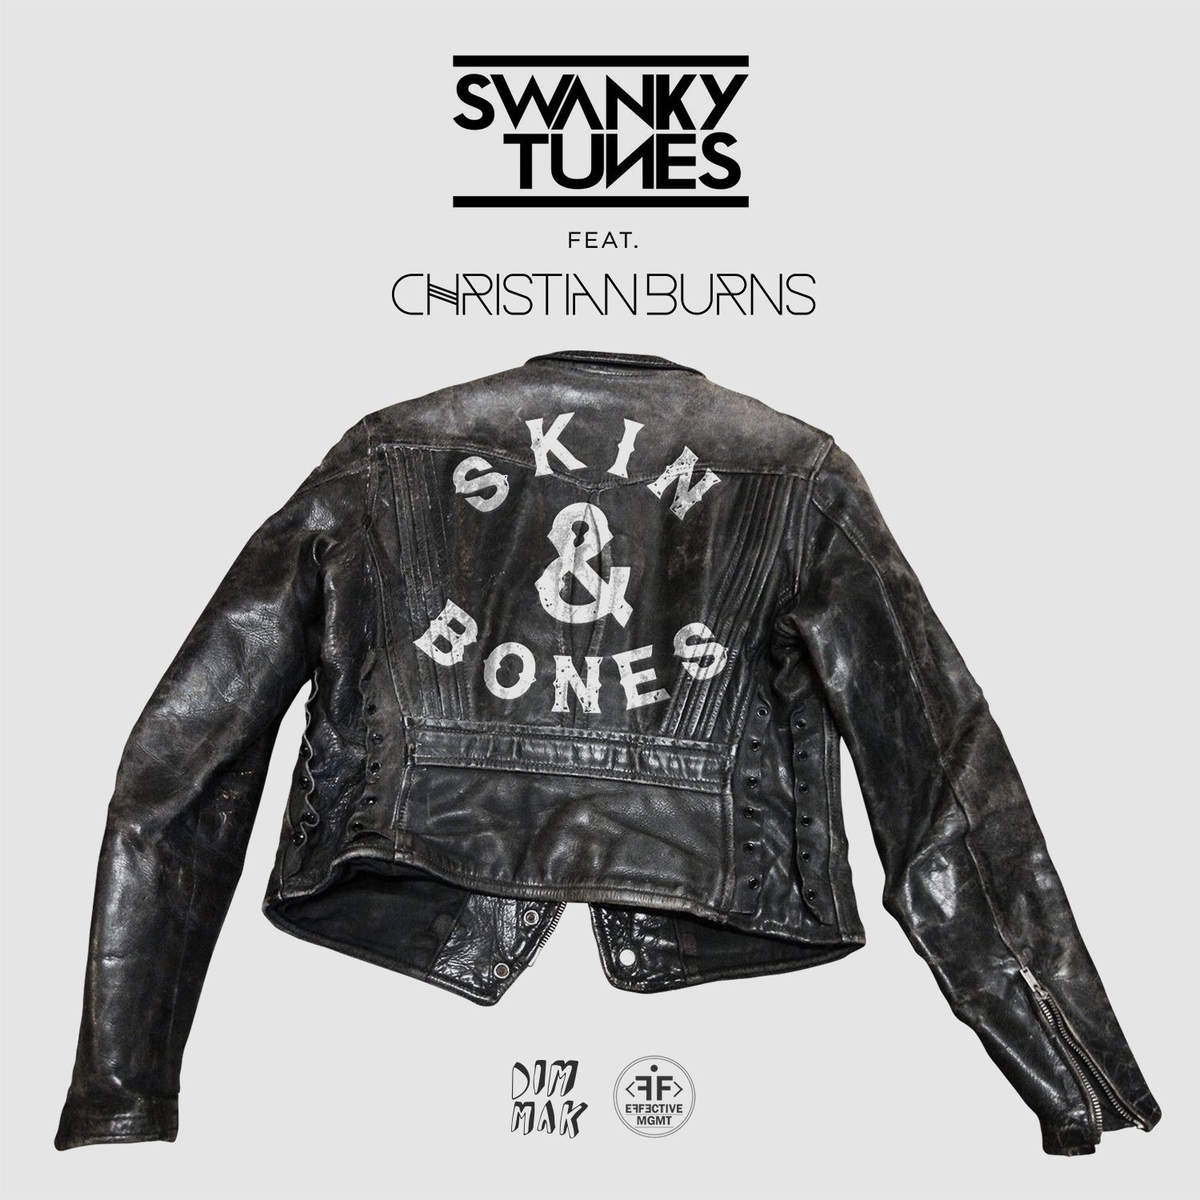 Swanky tunes go deeper. Swanky Tunes Skin and Bones. Skin and Bones одежда. Костюм Swanky. Christian Burns.